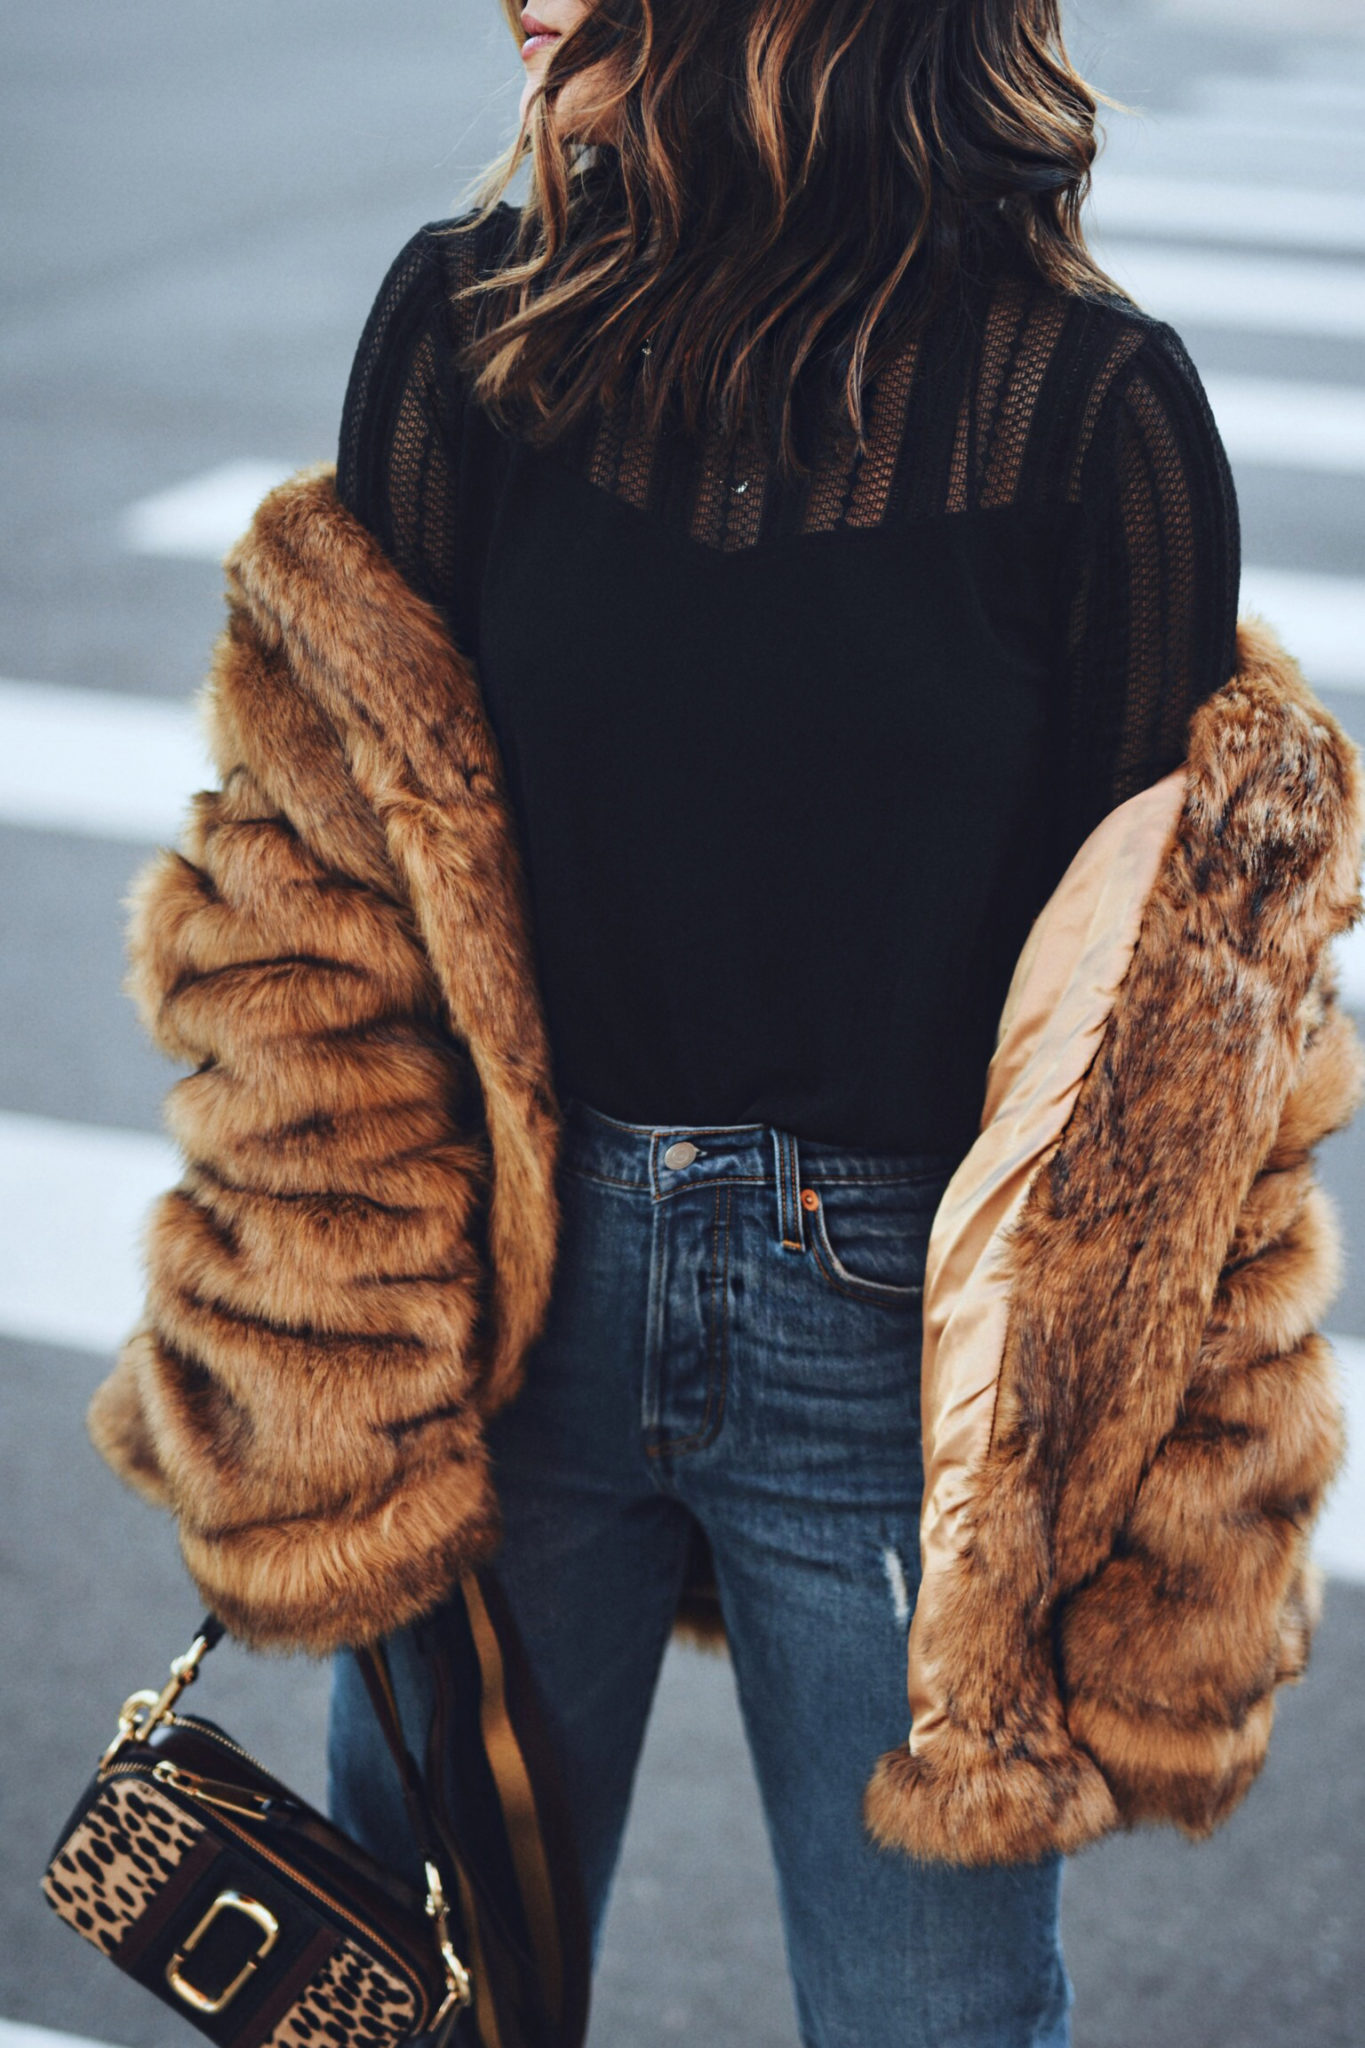 Carolina Hellal of Chic Talk wearing a faux fur coat via ASOS, Levi's jeans, Marc Jacobs crossbody bag and Nine West high heels.